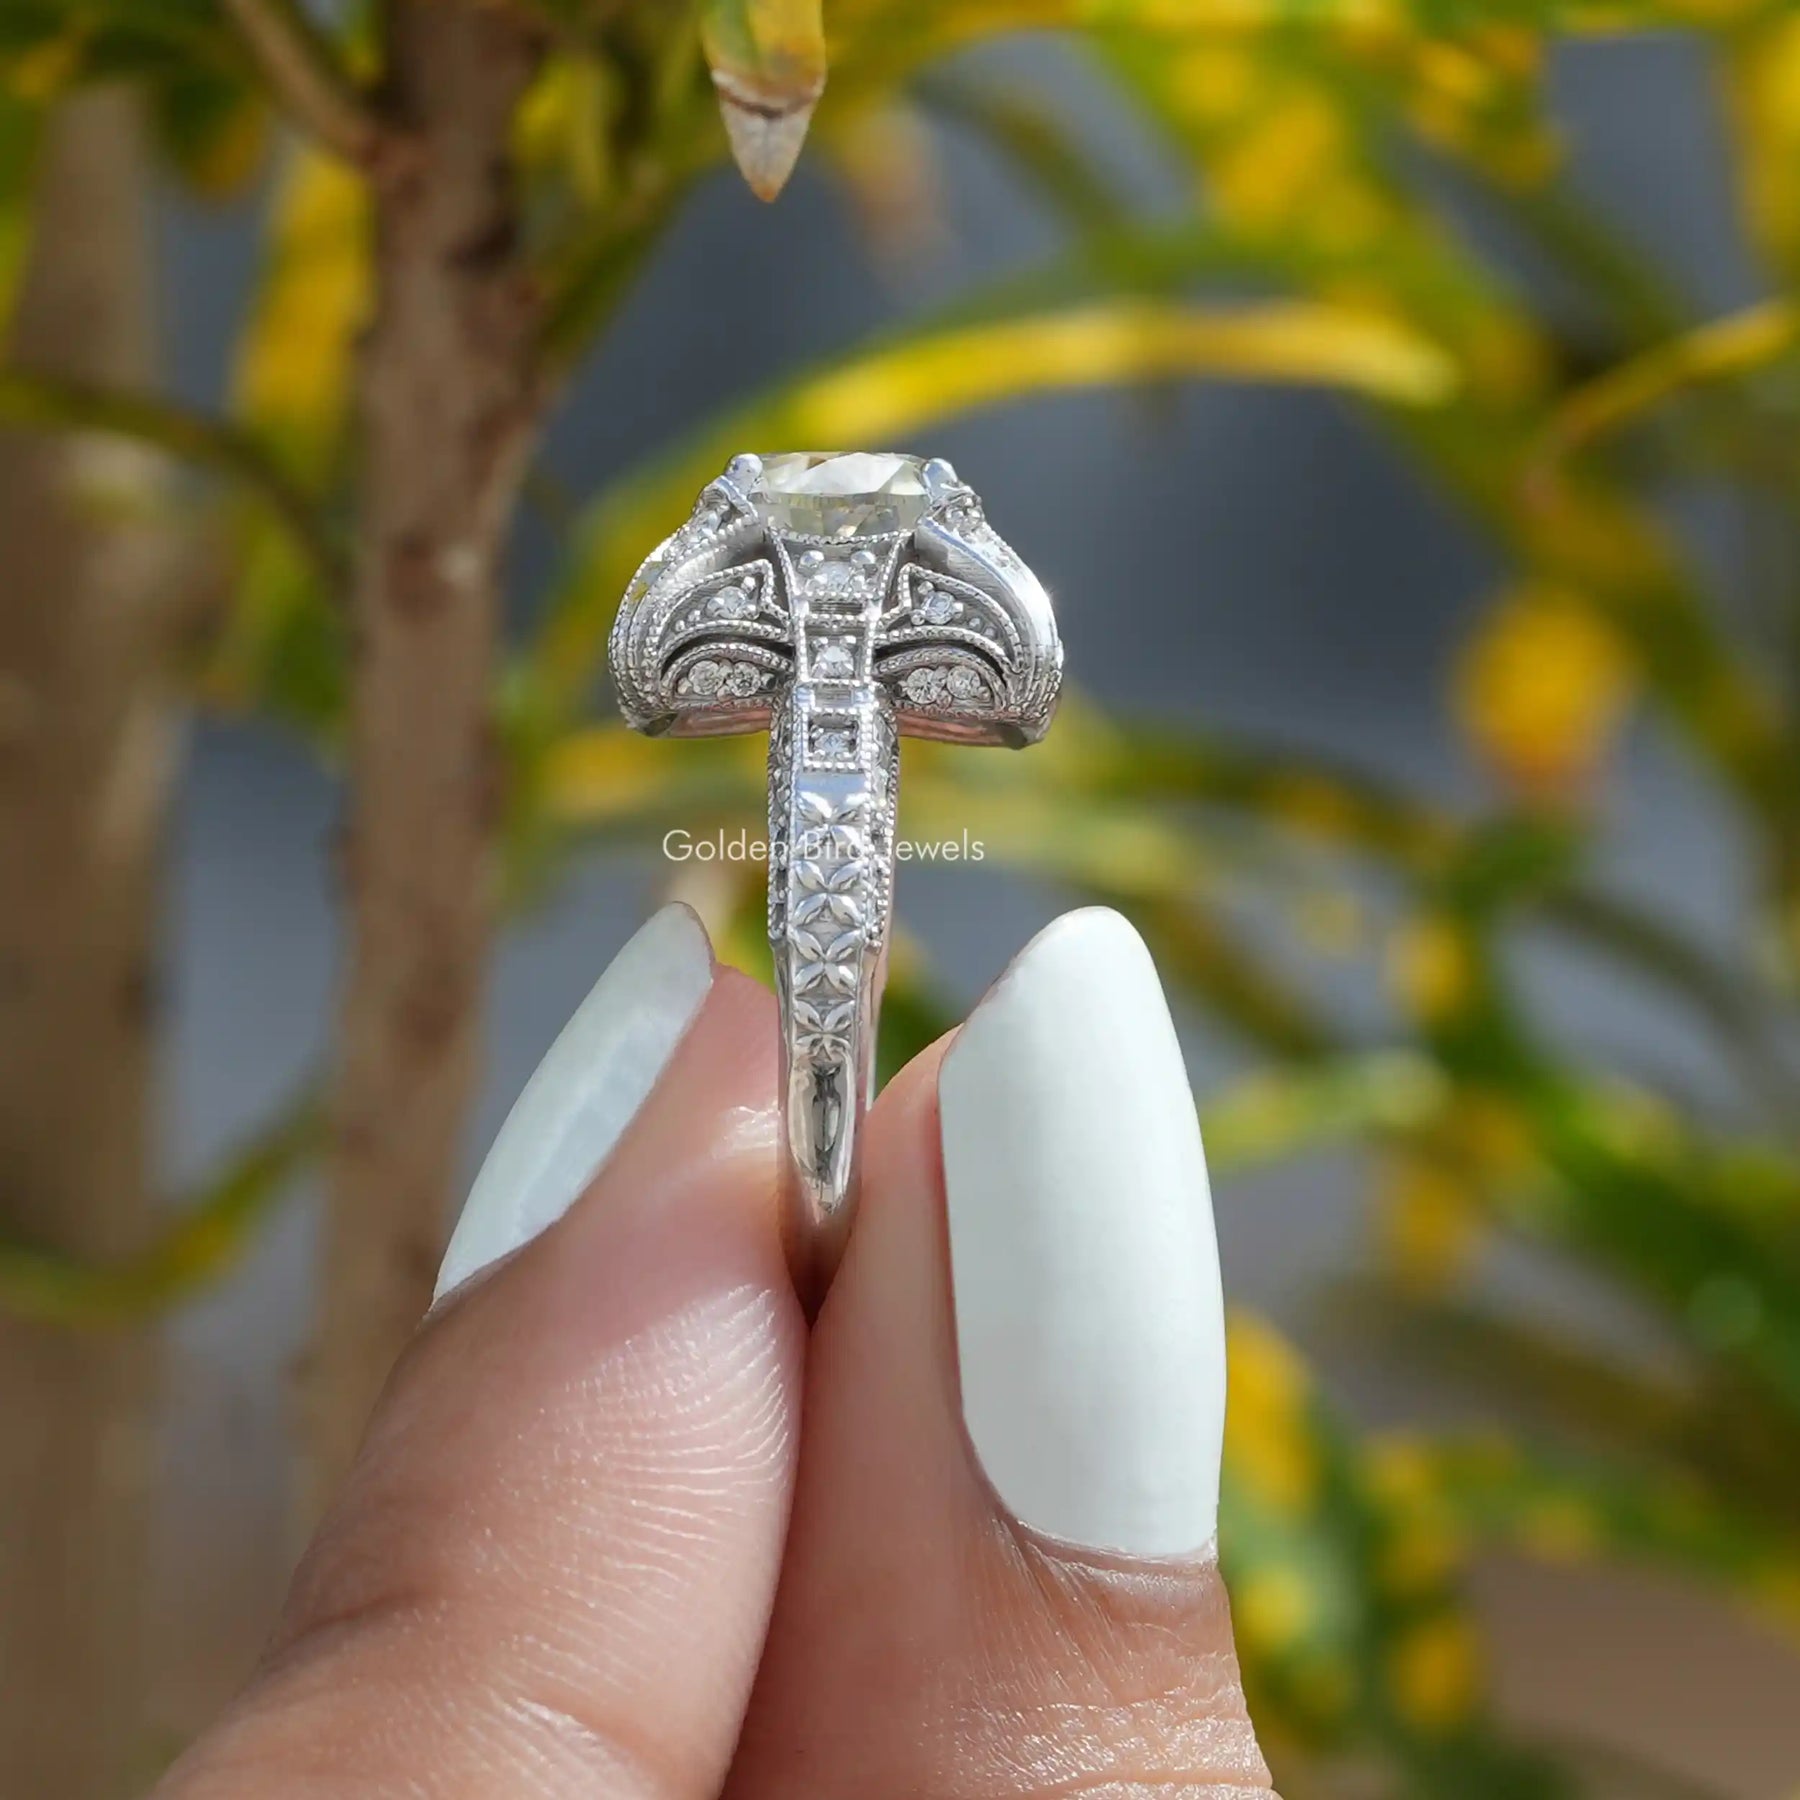 [Side view of european round cut moissanite vintage ring]-[Golden Bird Jewels]